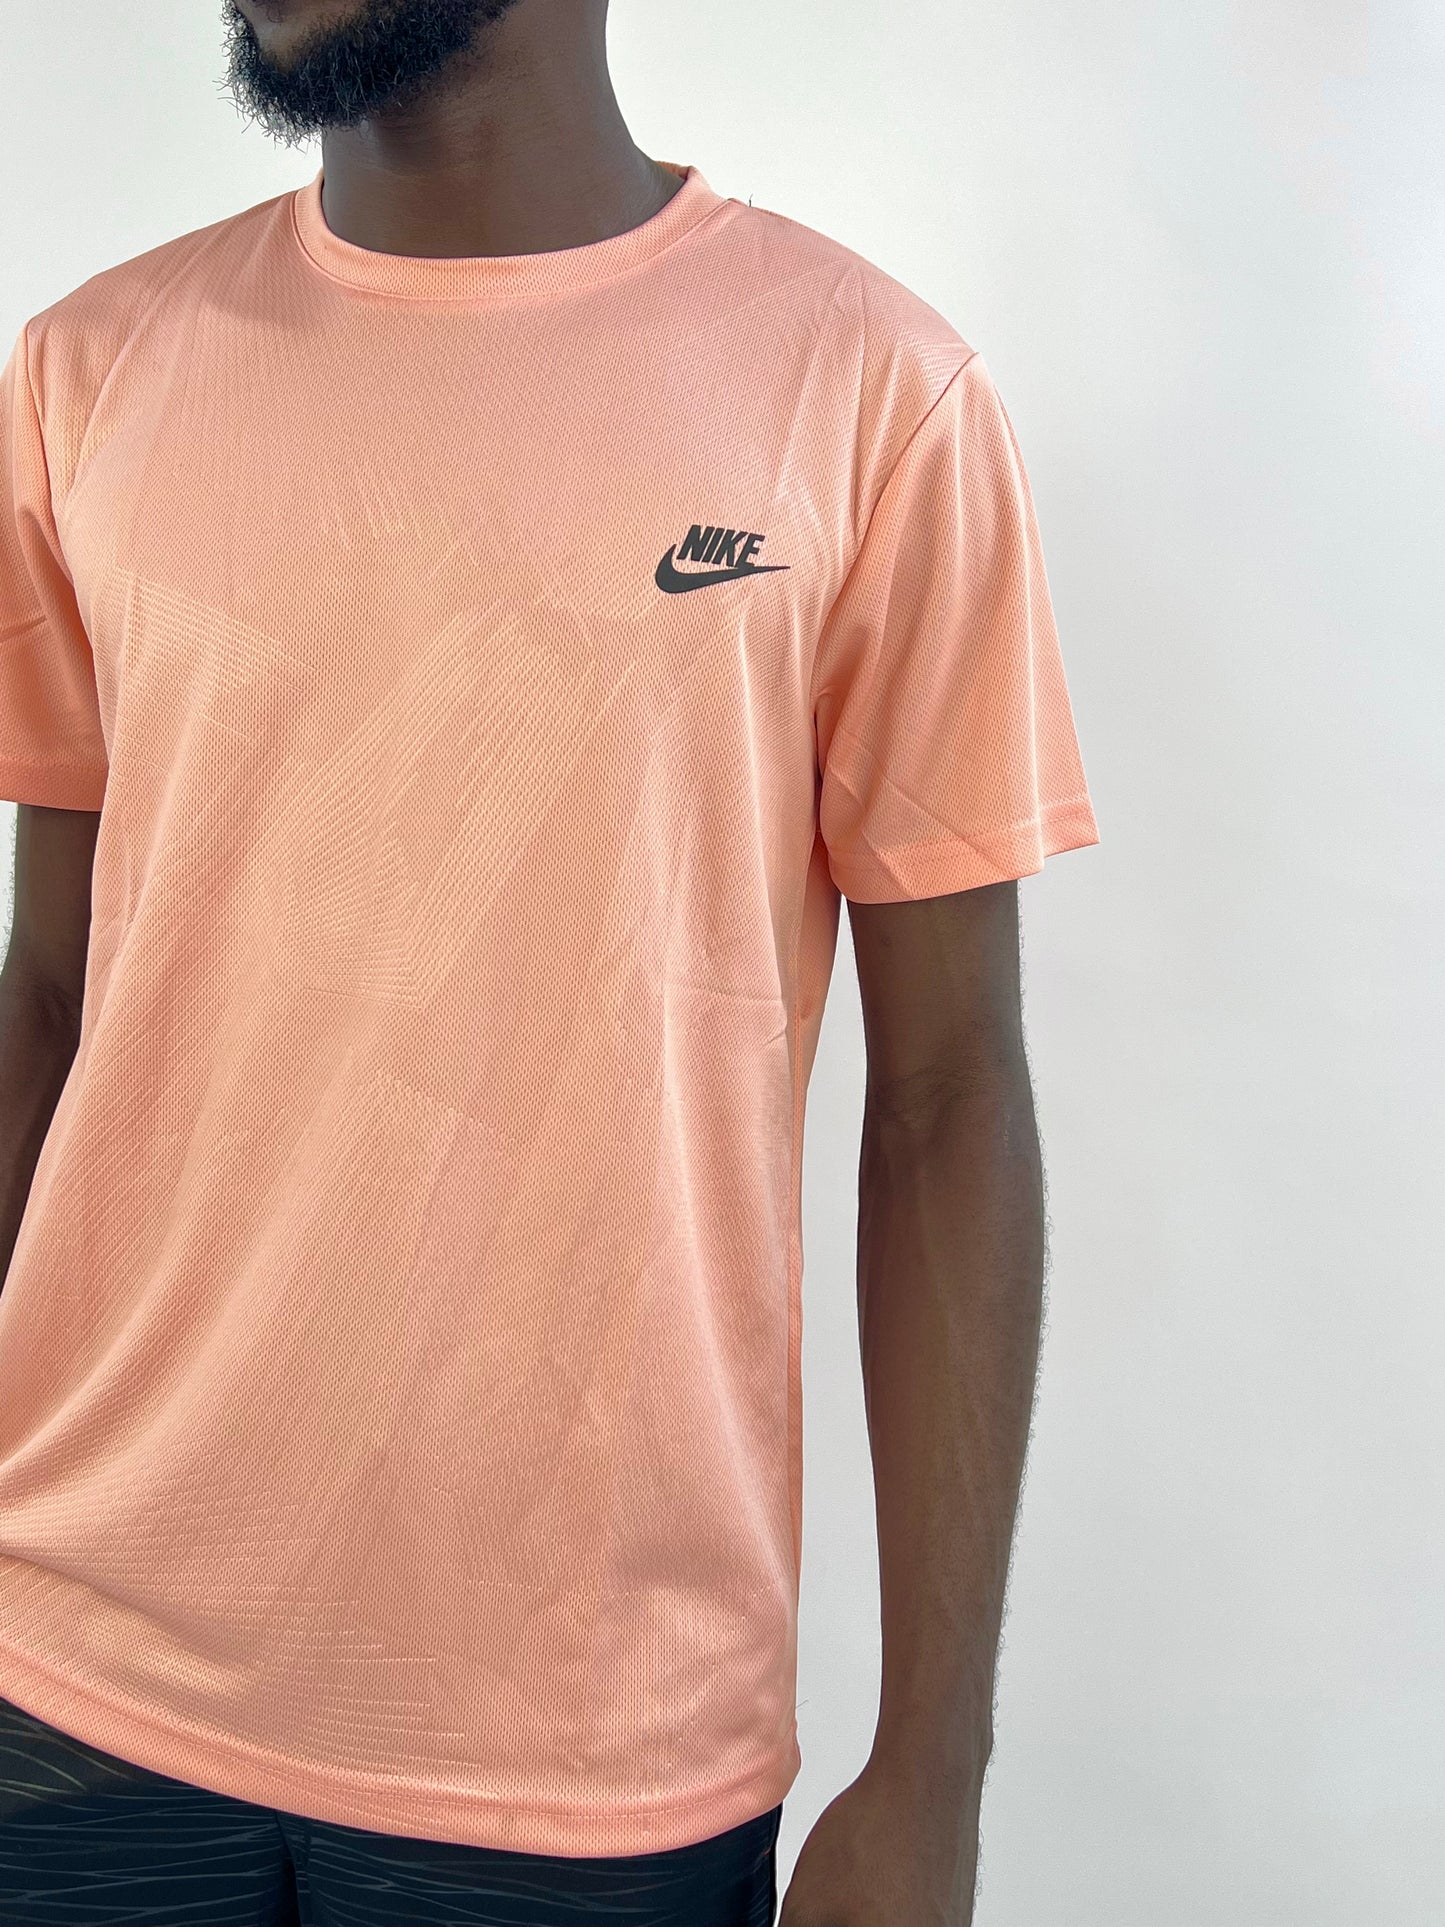 Nike Logo Sports T-shirt in pink